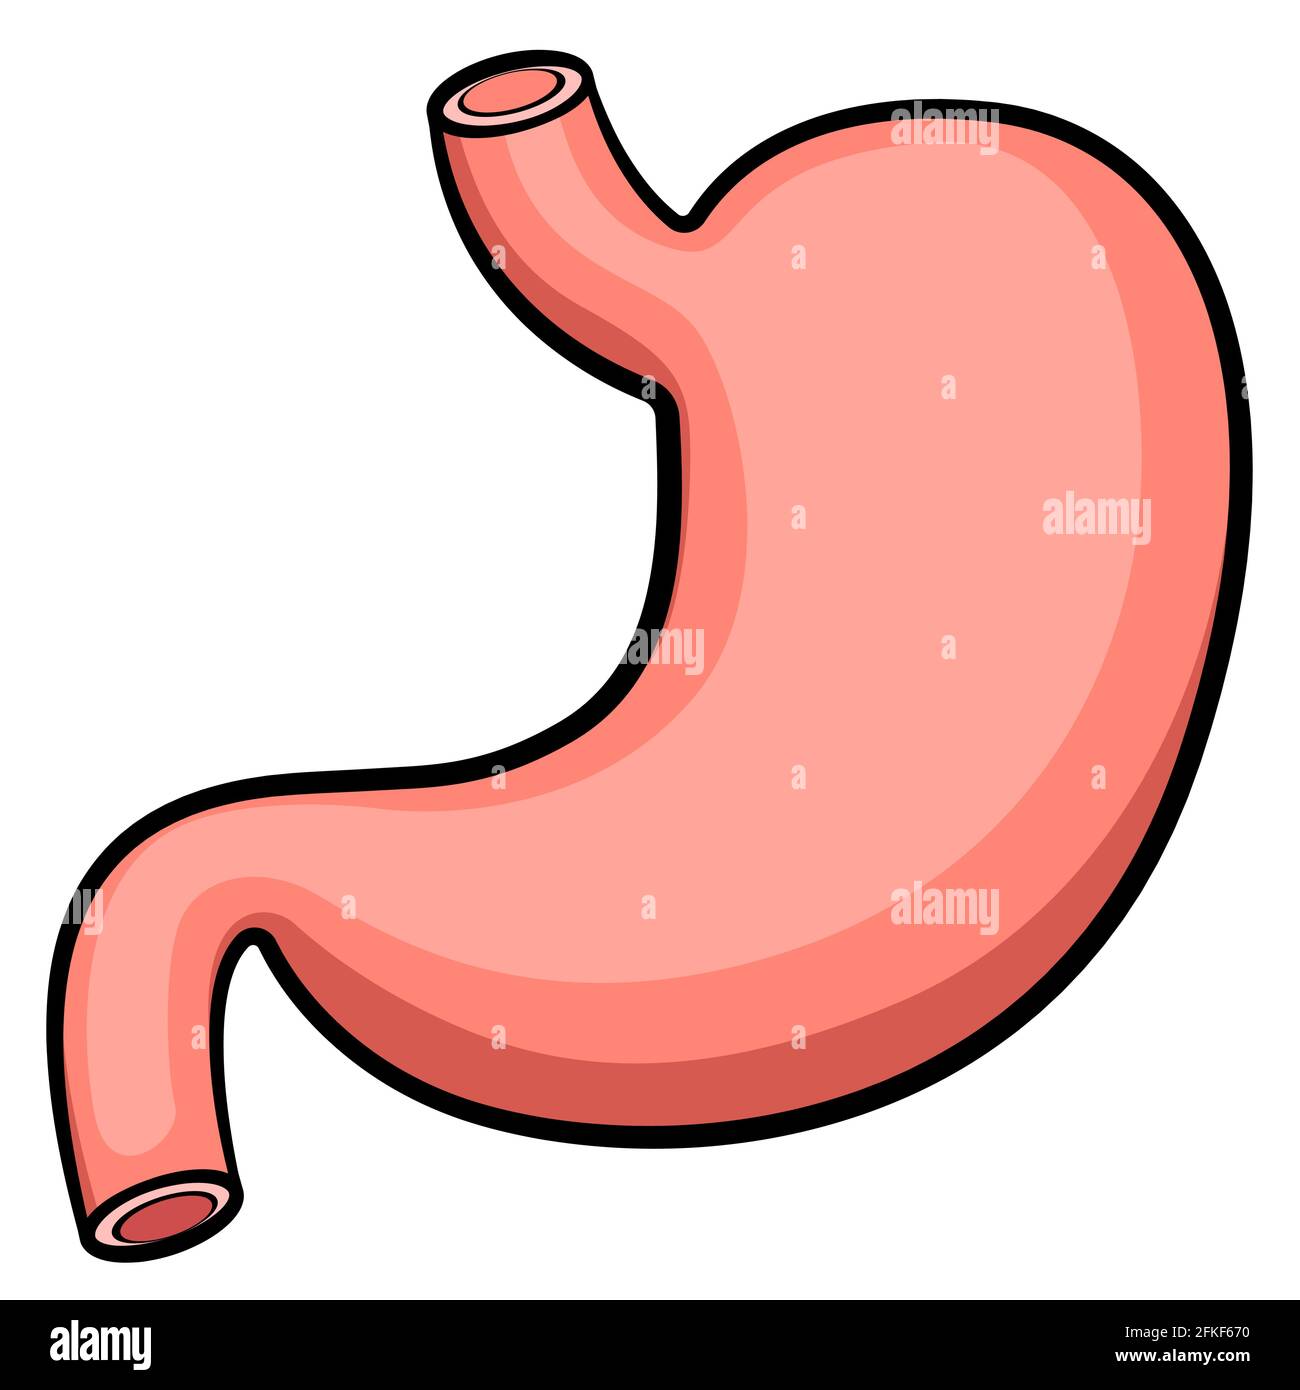 Vector illustration of stomach digestive system organ Stock Vector